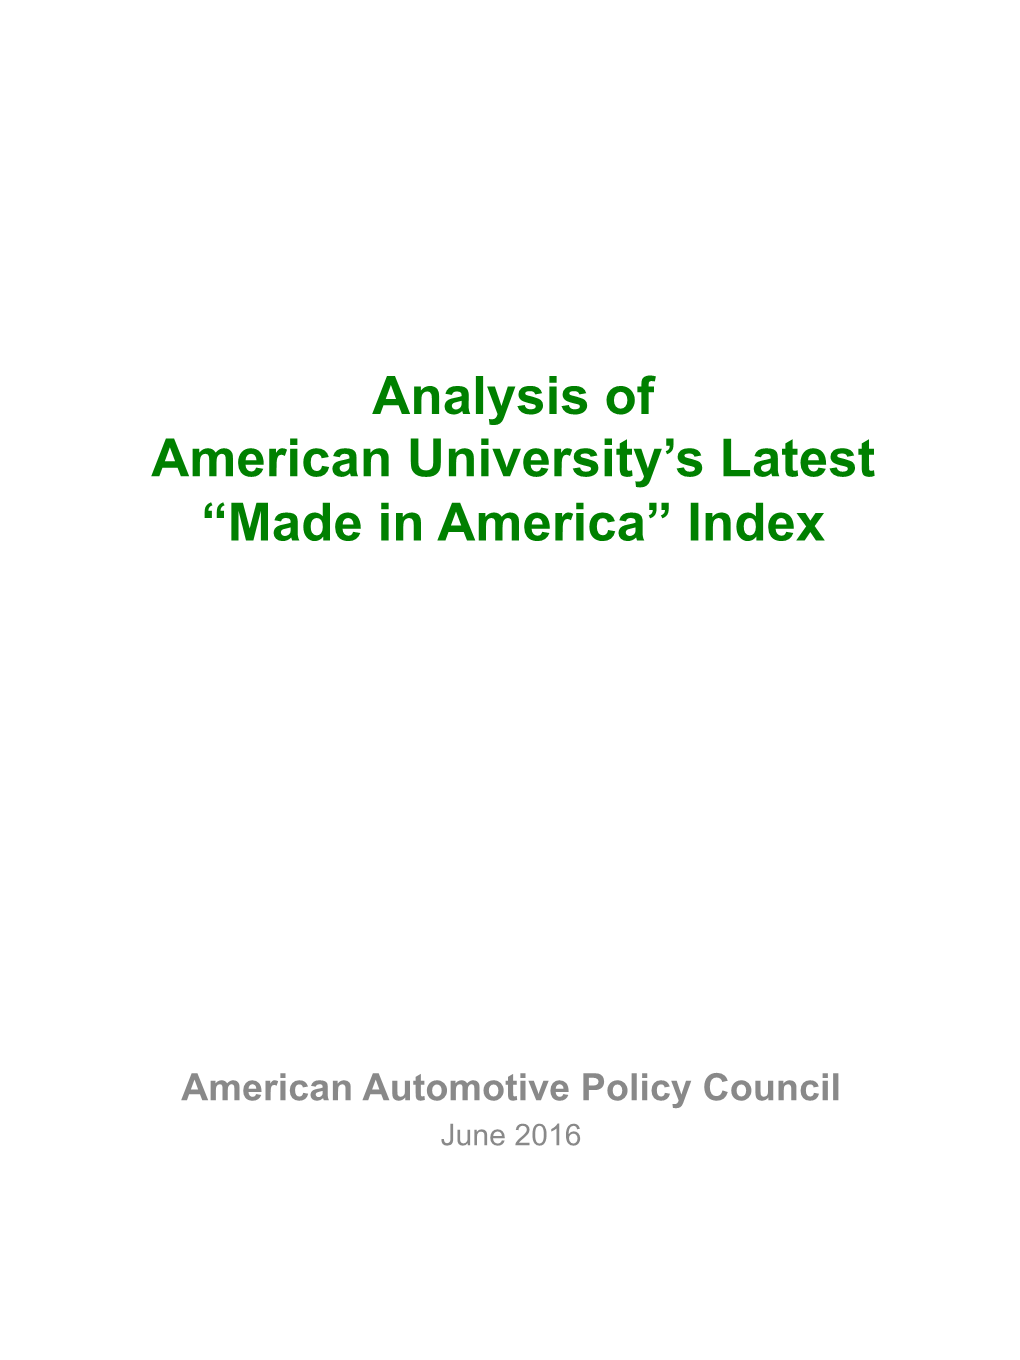 AAPC Analysis of 2016 AU Kogod Made in America Auto Index.Pdf